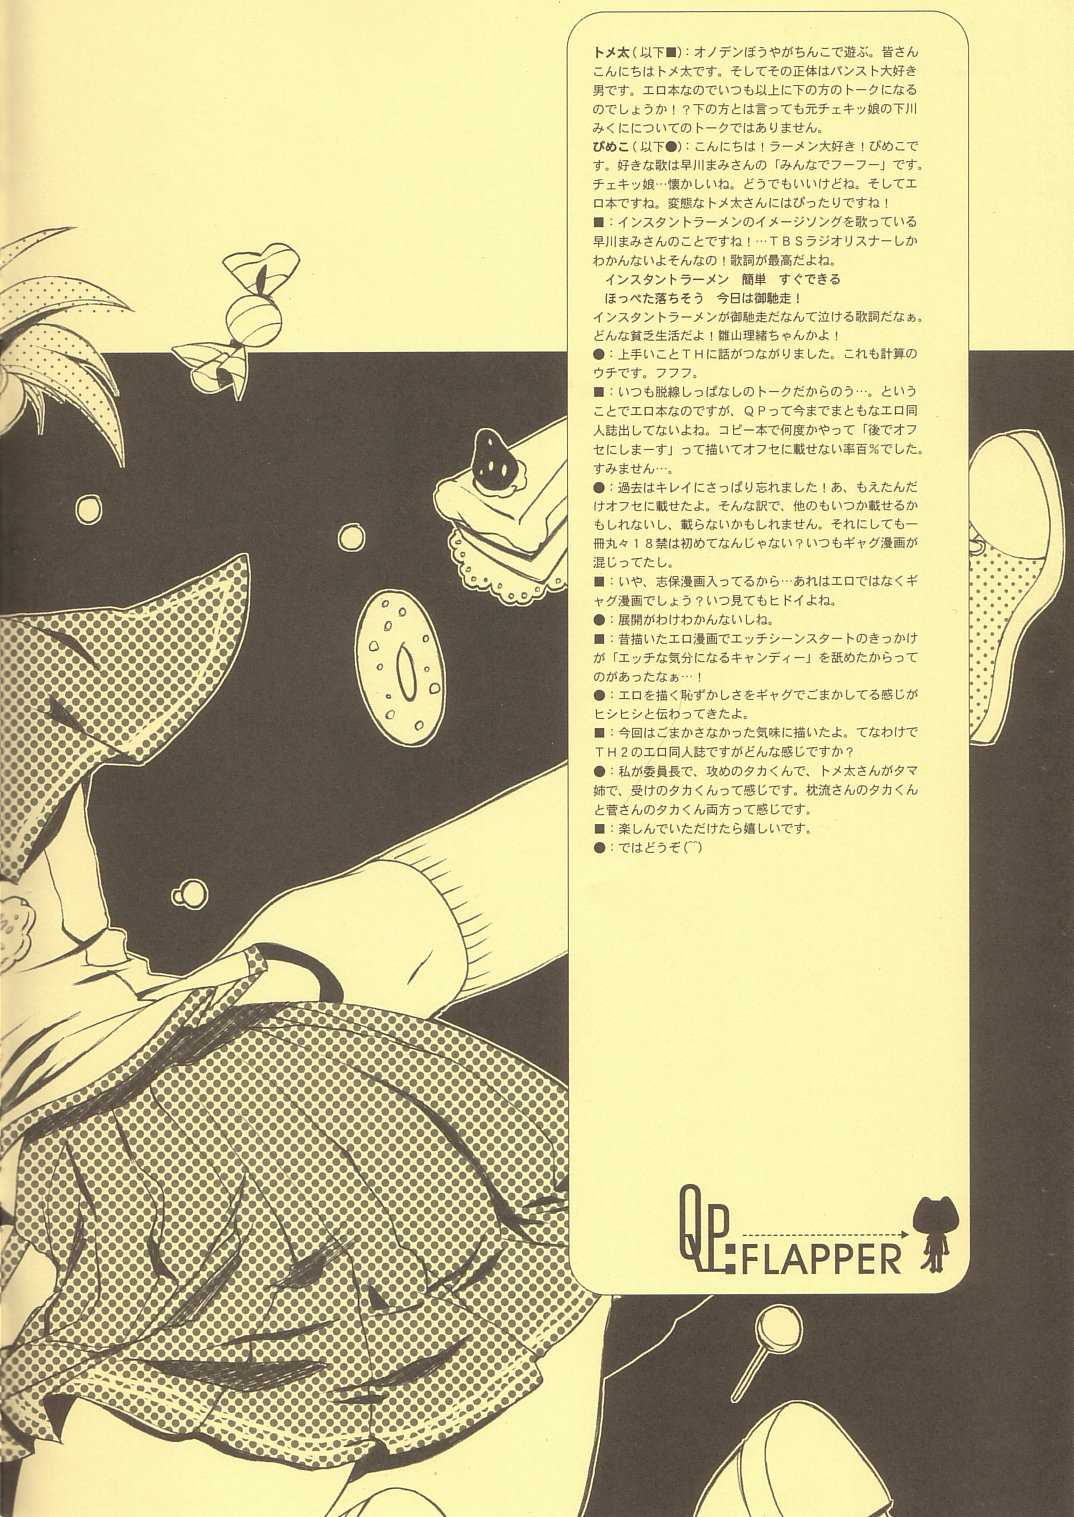 [QP Flapper] LEAFY vol.2 (To Heart 2) 